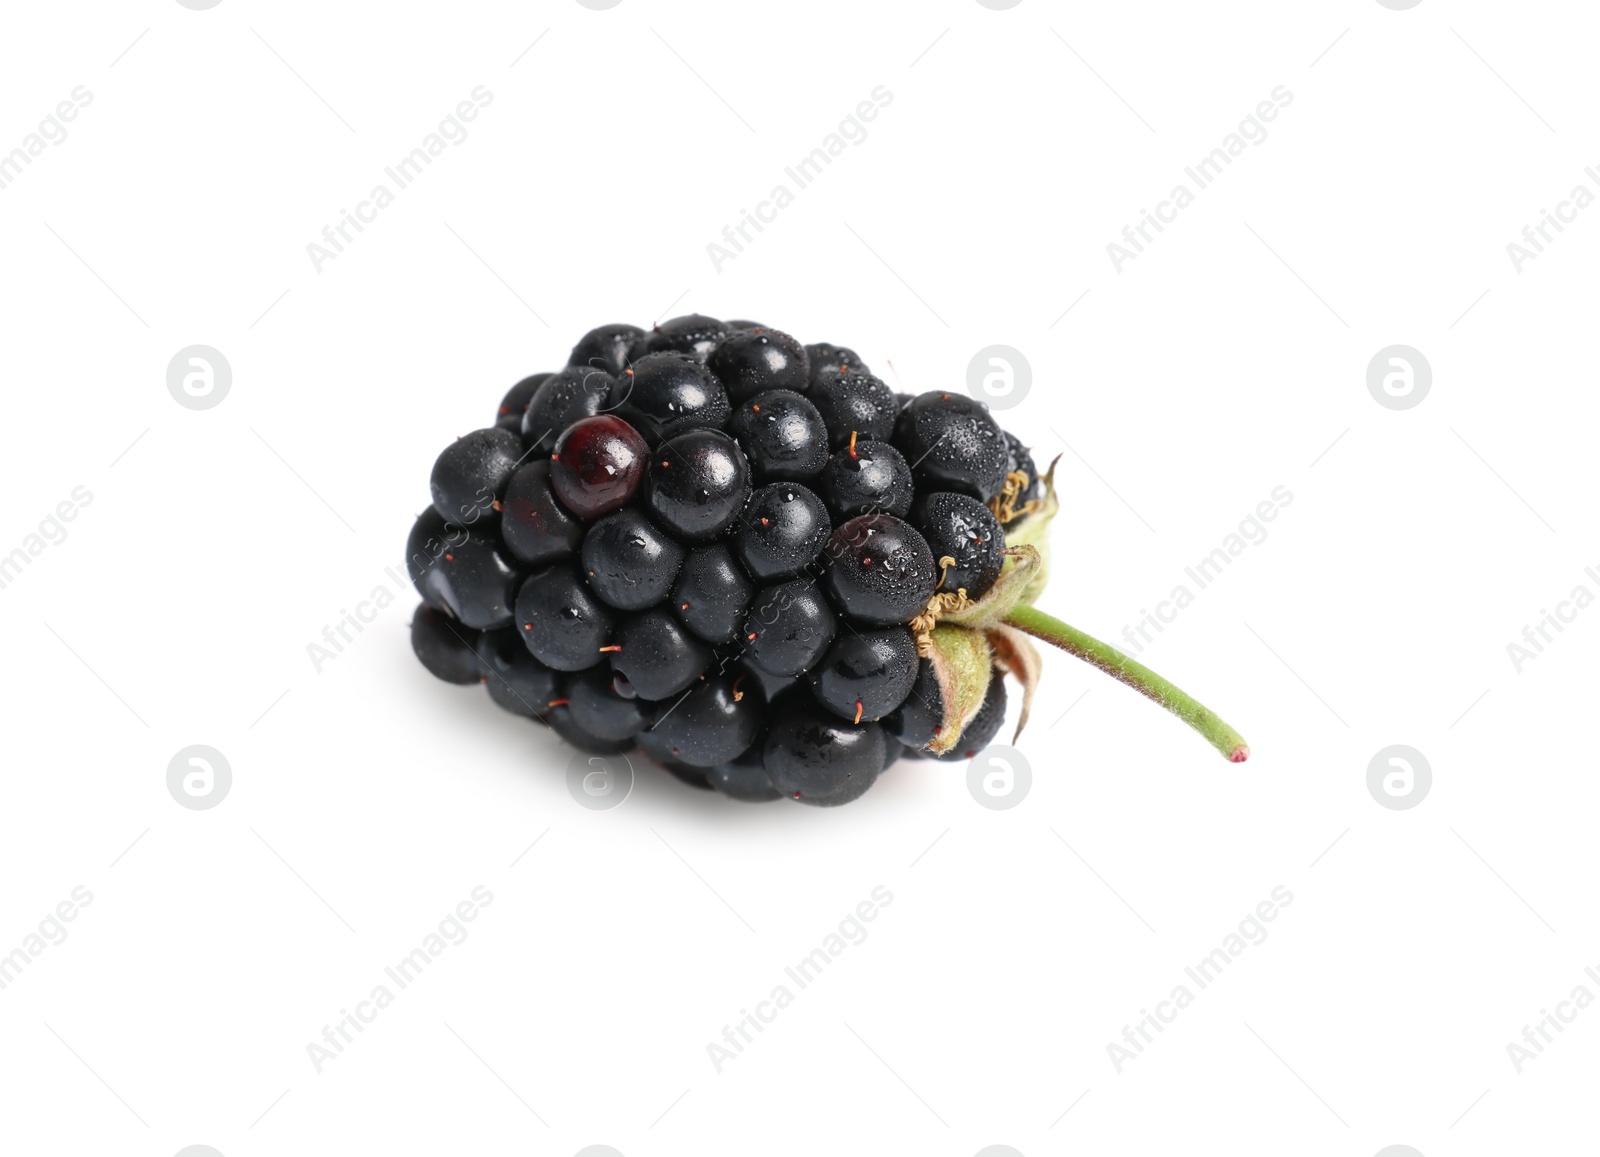 Photo of One tasty ripe blackberry isolated on white